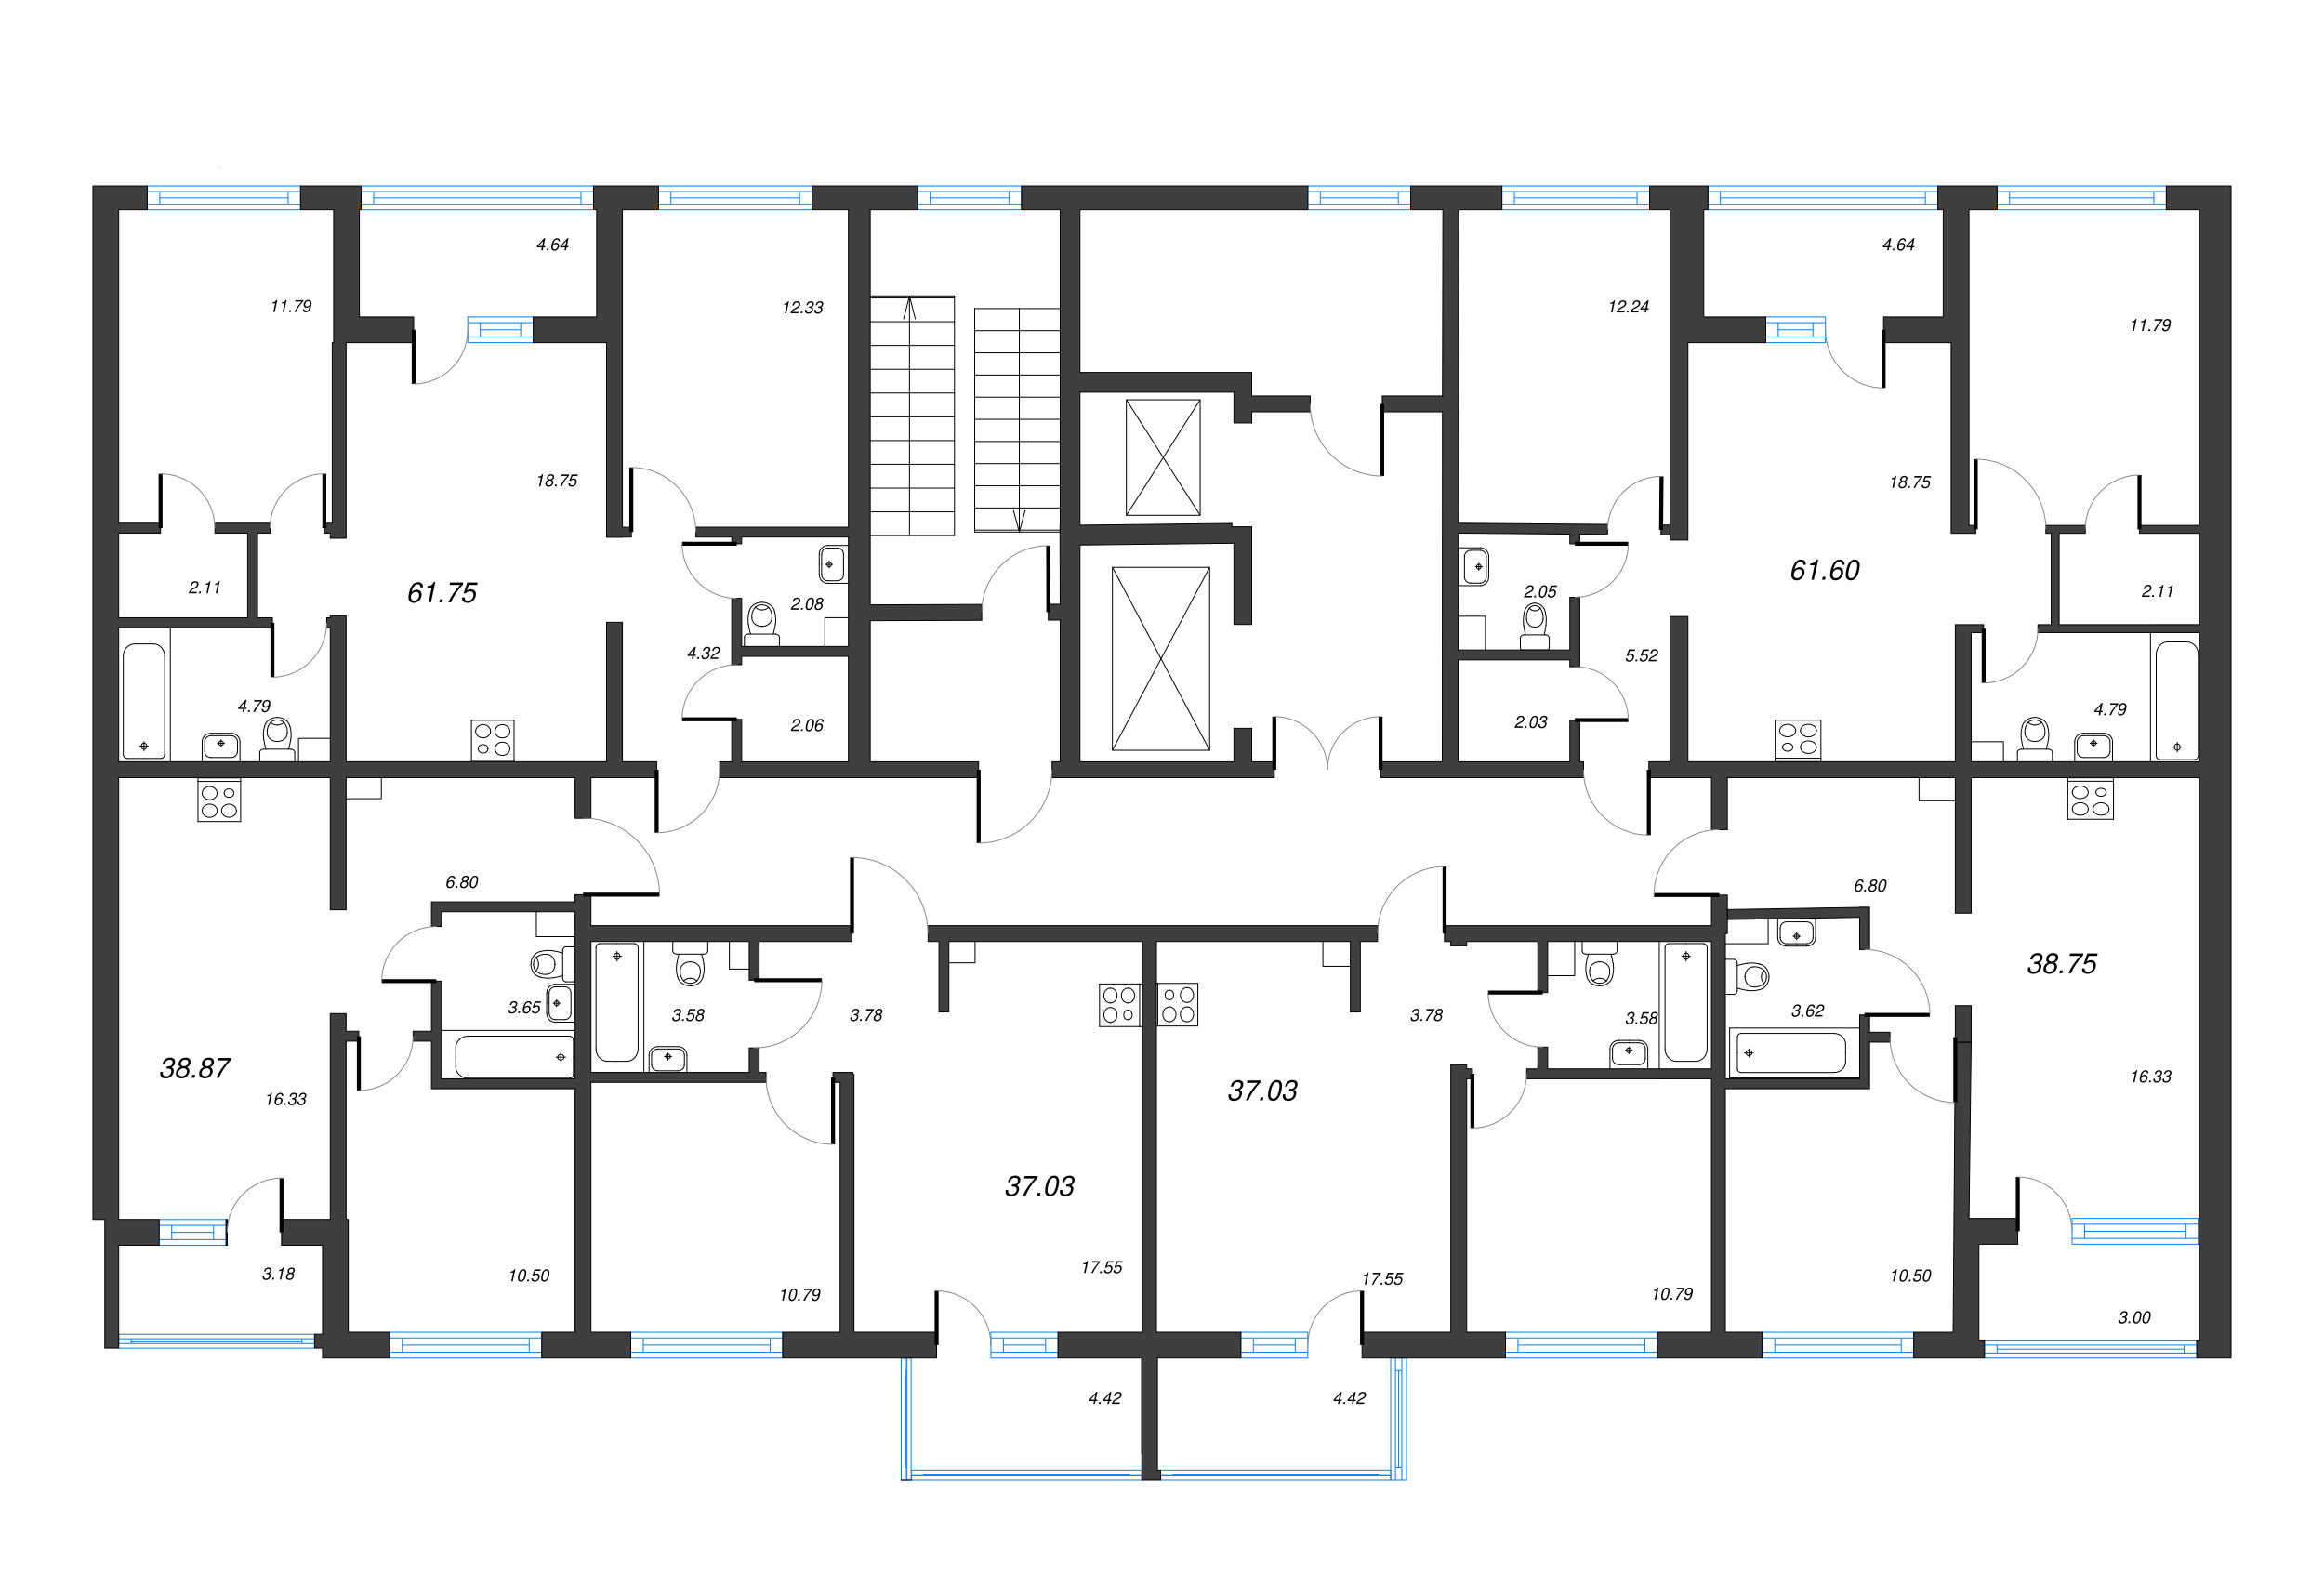 2-комнатная (Евро) квартира, 37.03 м² - планировка этажа